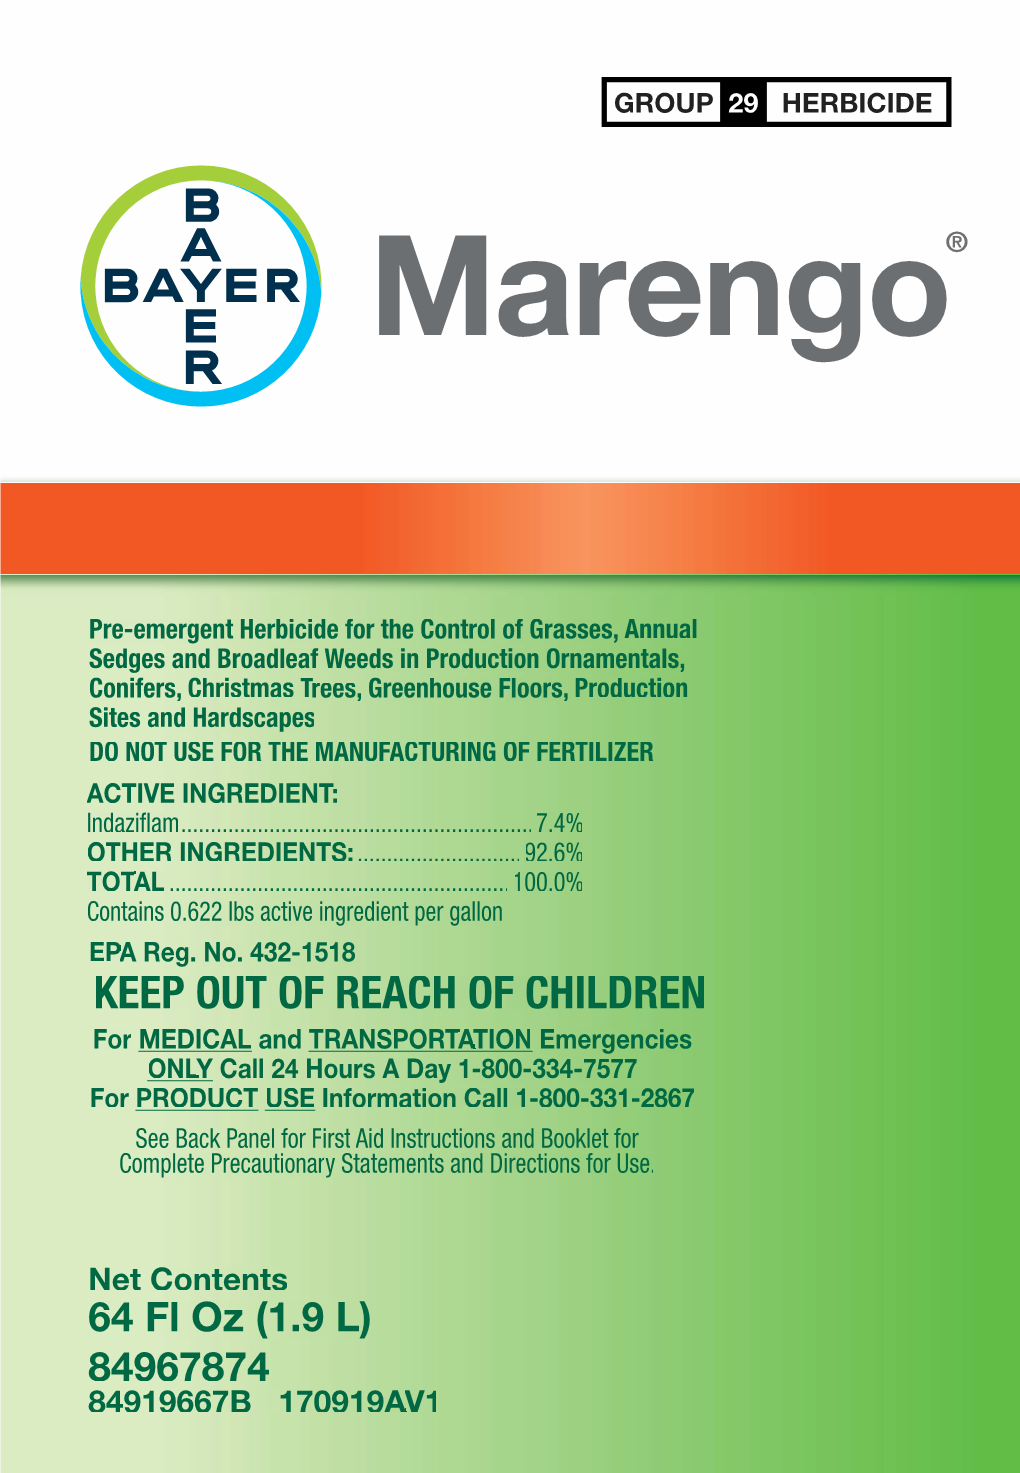 Marengo Herbicide Label